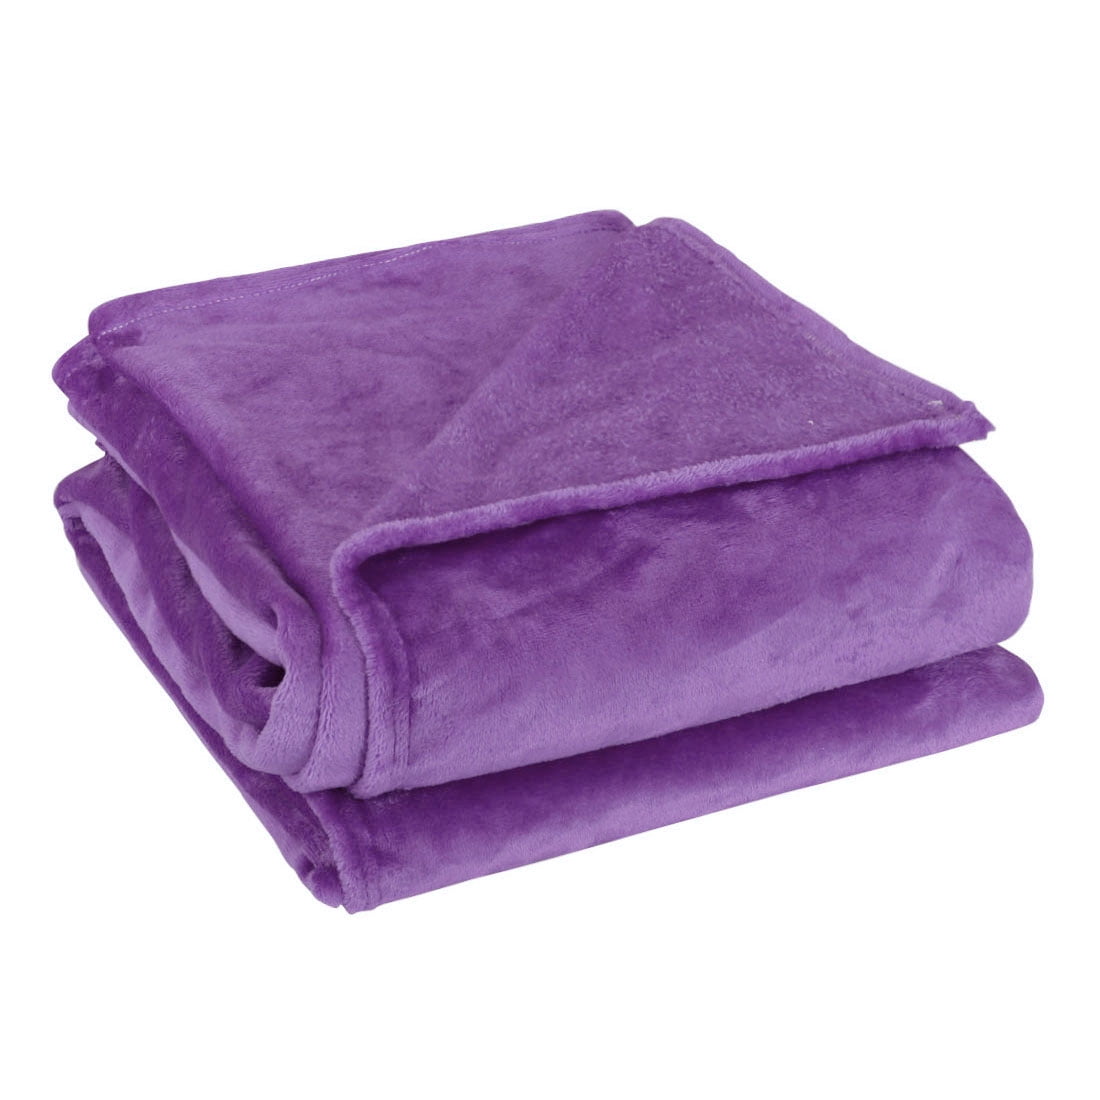 Throw Rug Soft Touch Throw Blanket Decorative Bedding Blanket 127x150cms PLUM 